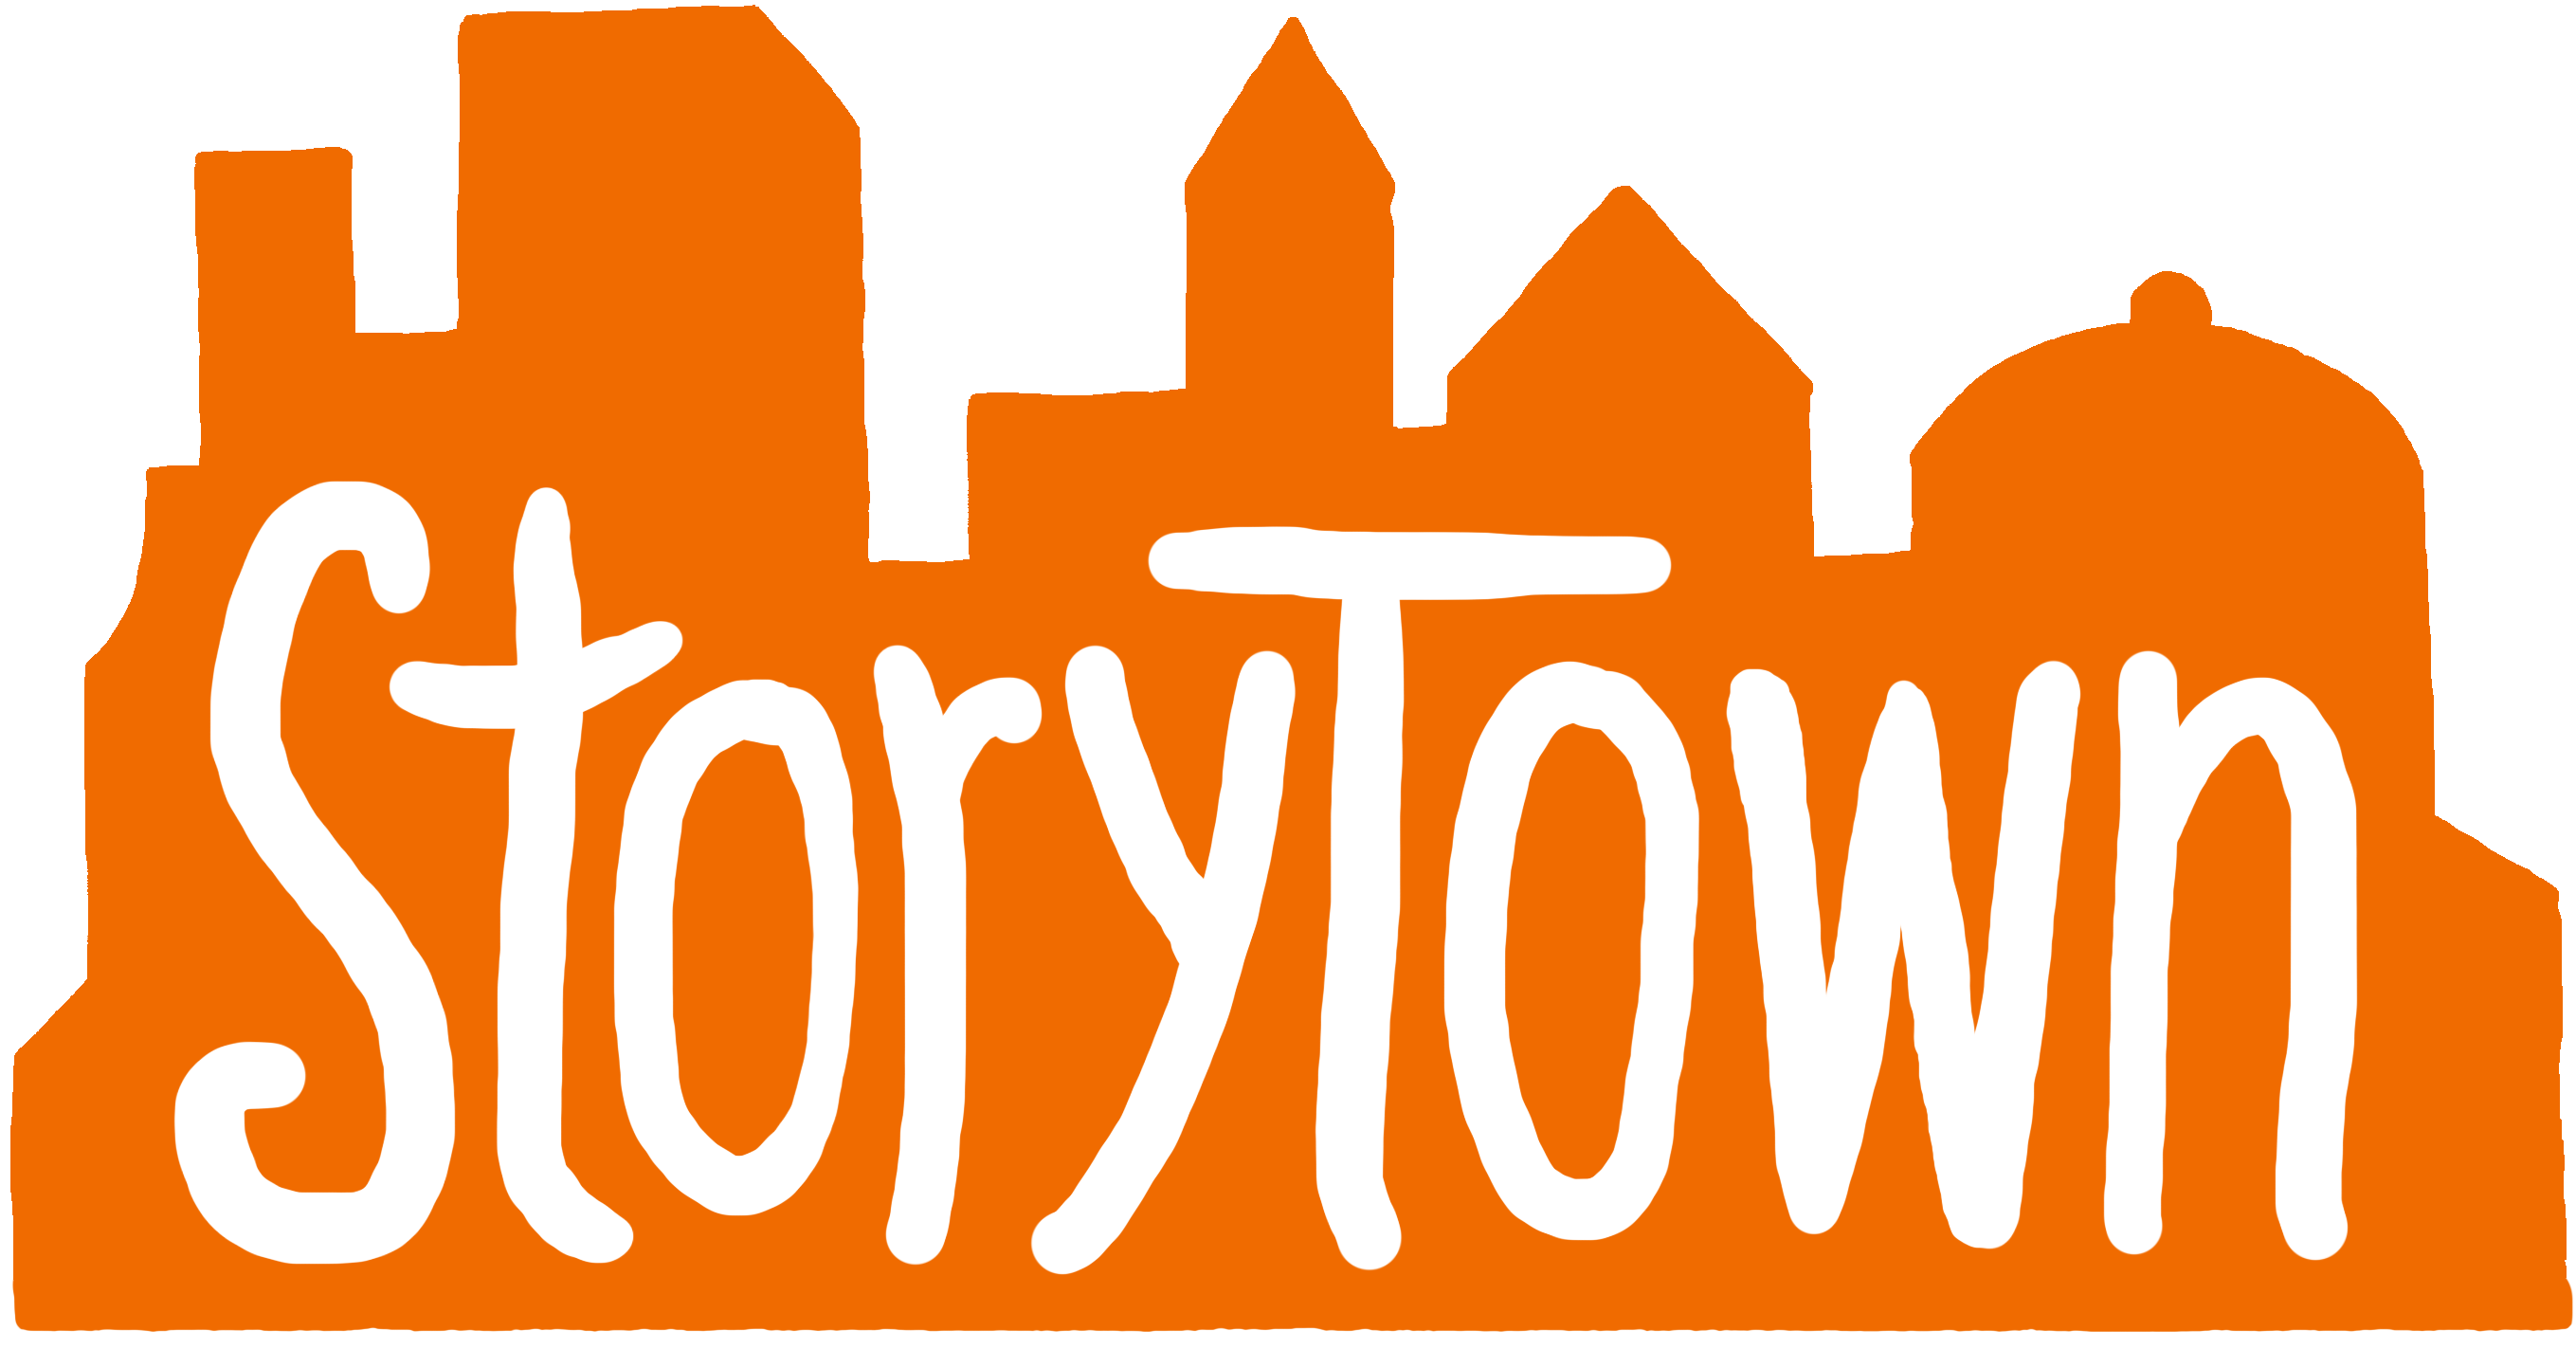 StoryTown